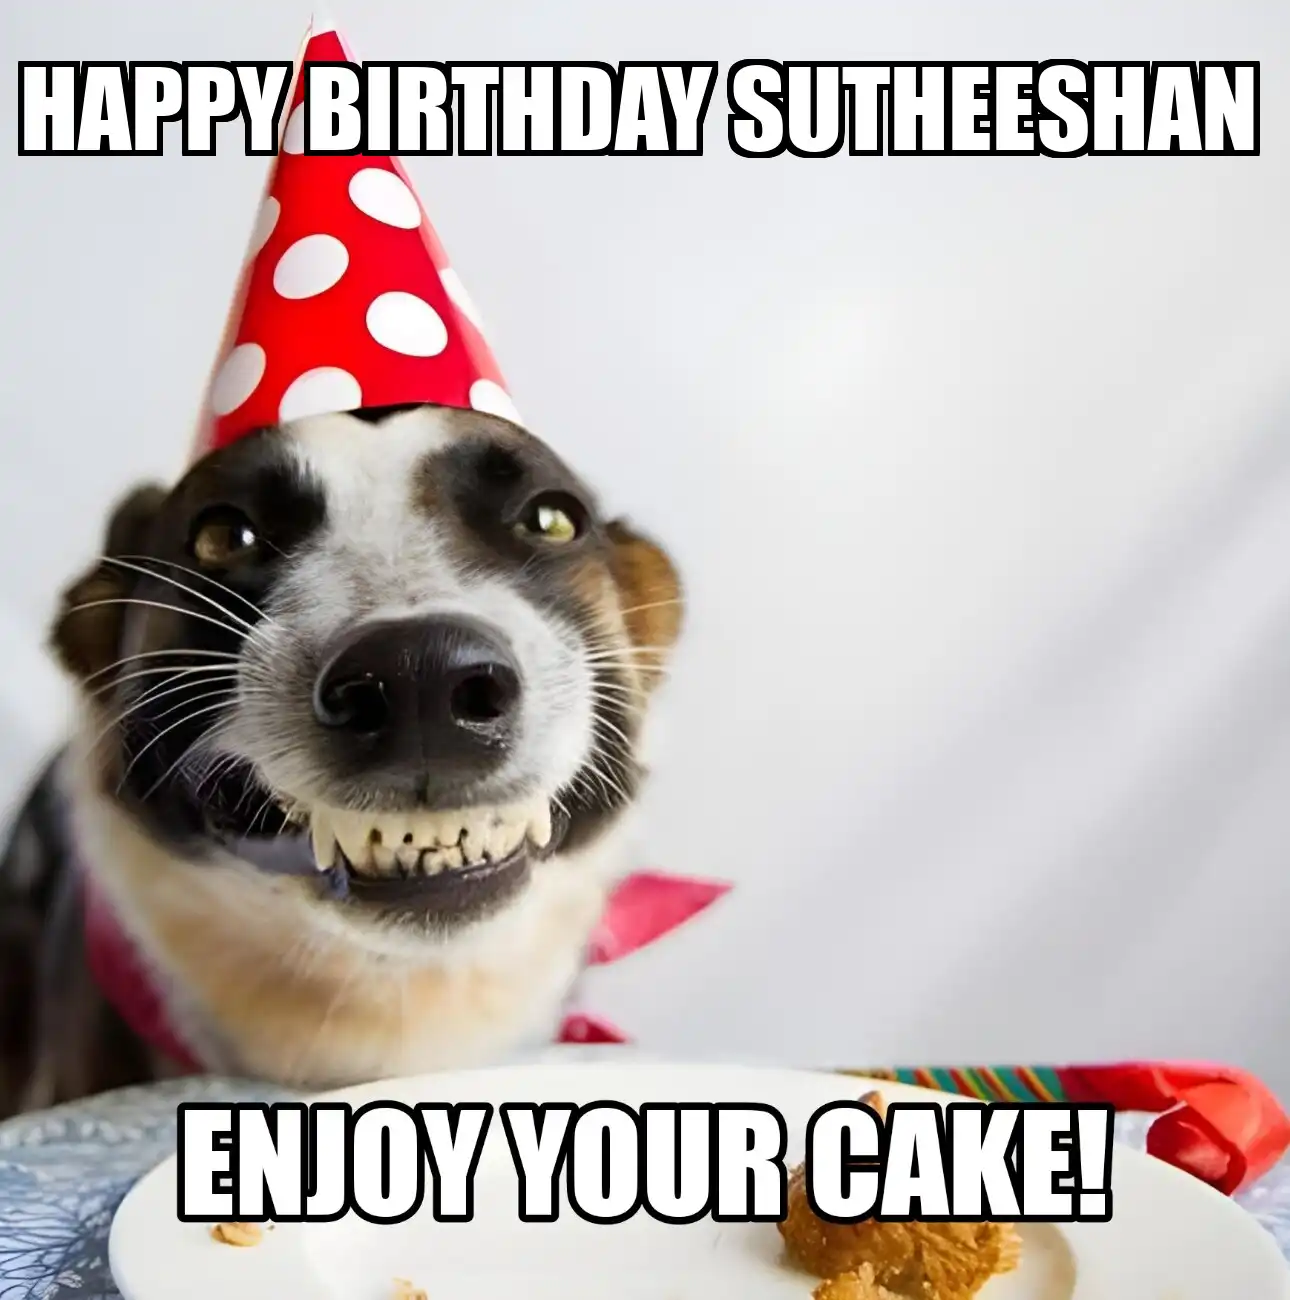 Happy Birthday Sutheeshan Enjoy Your Cake Dog Meme